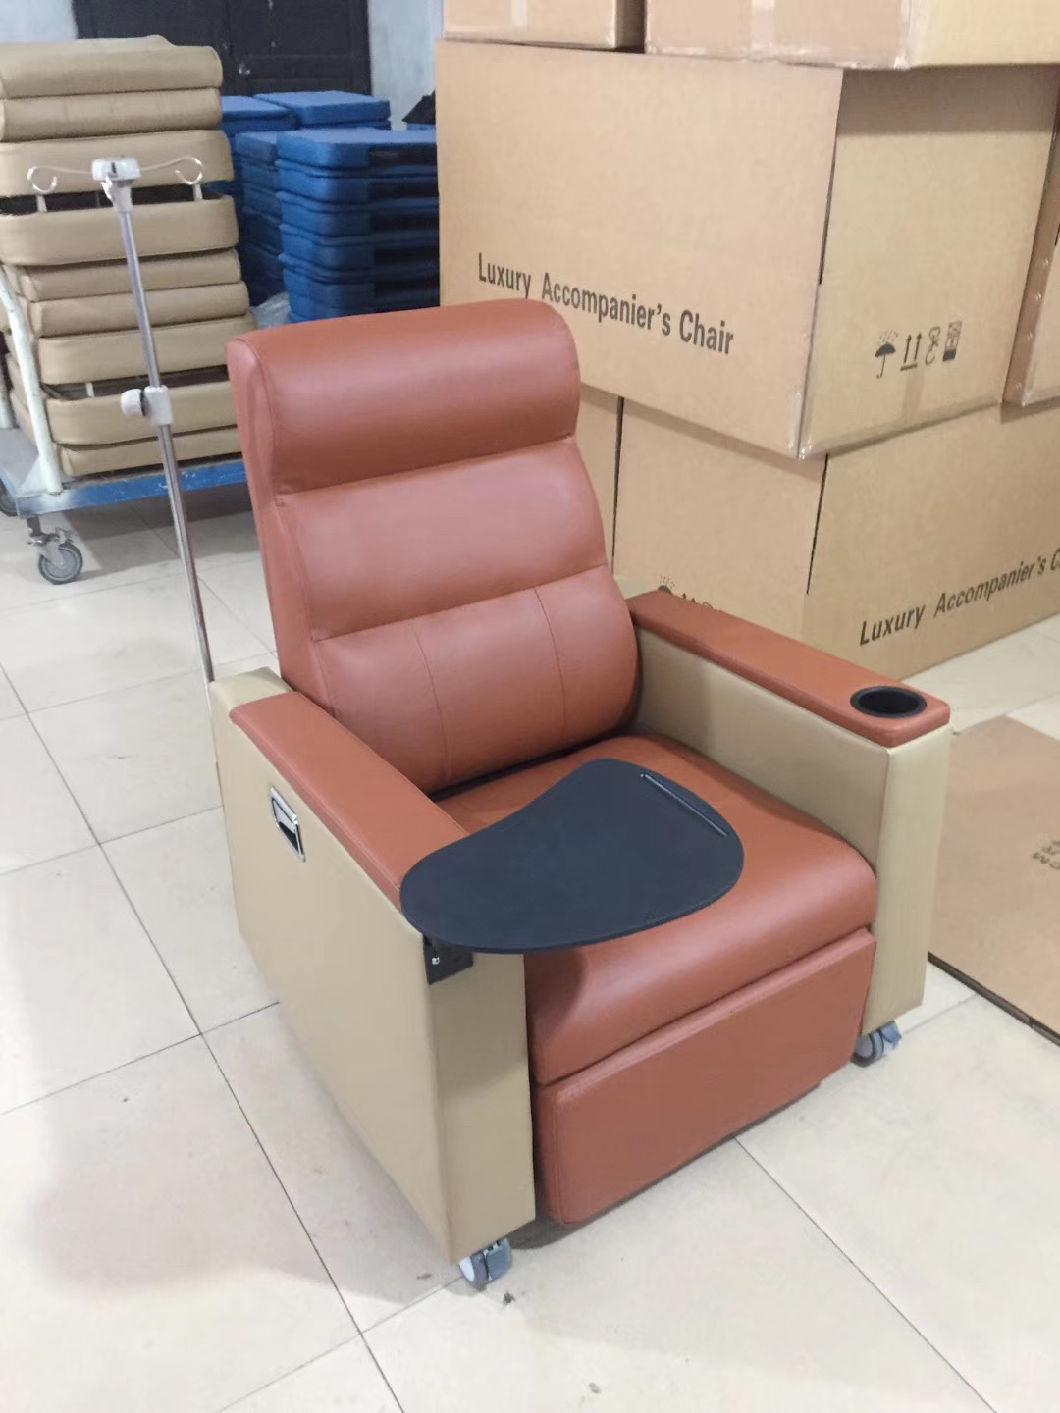 Mn-Syy003 Comfortable VIP Hospital Patient Ward Transfusion Chair